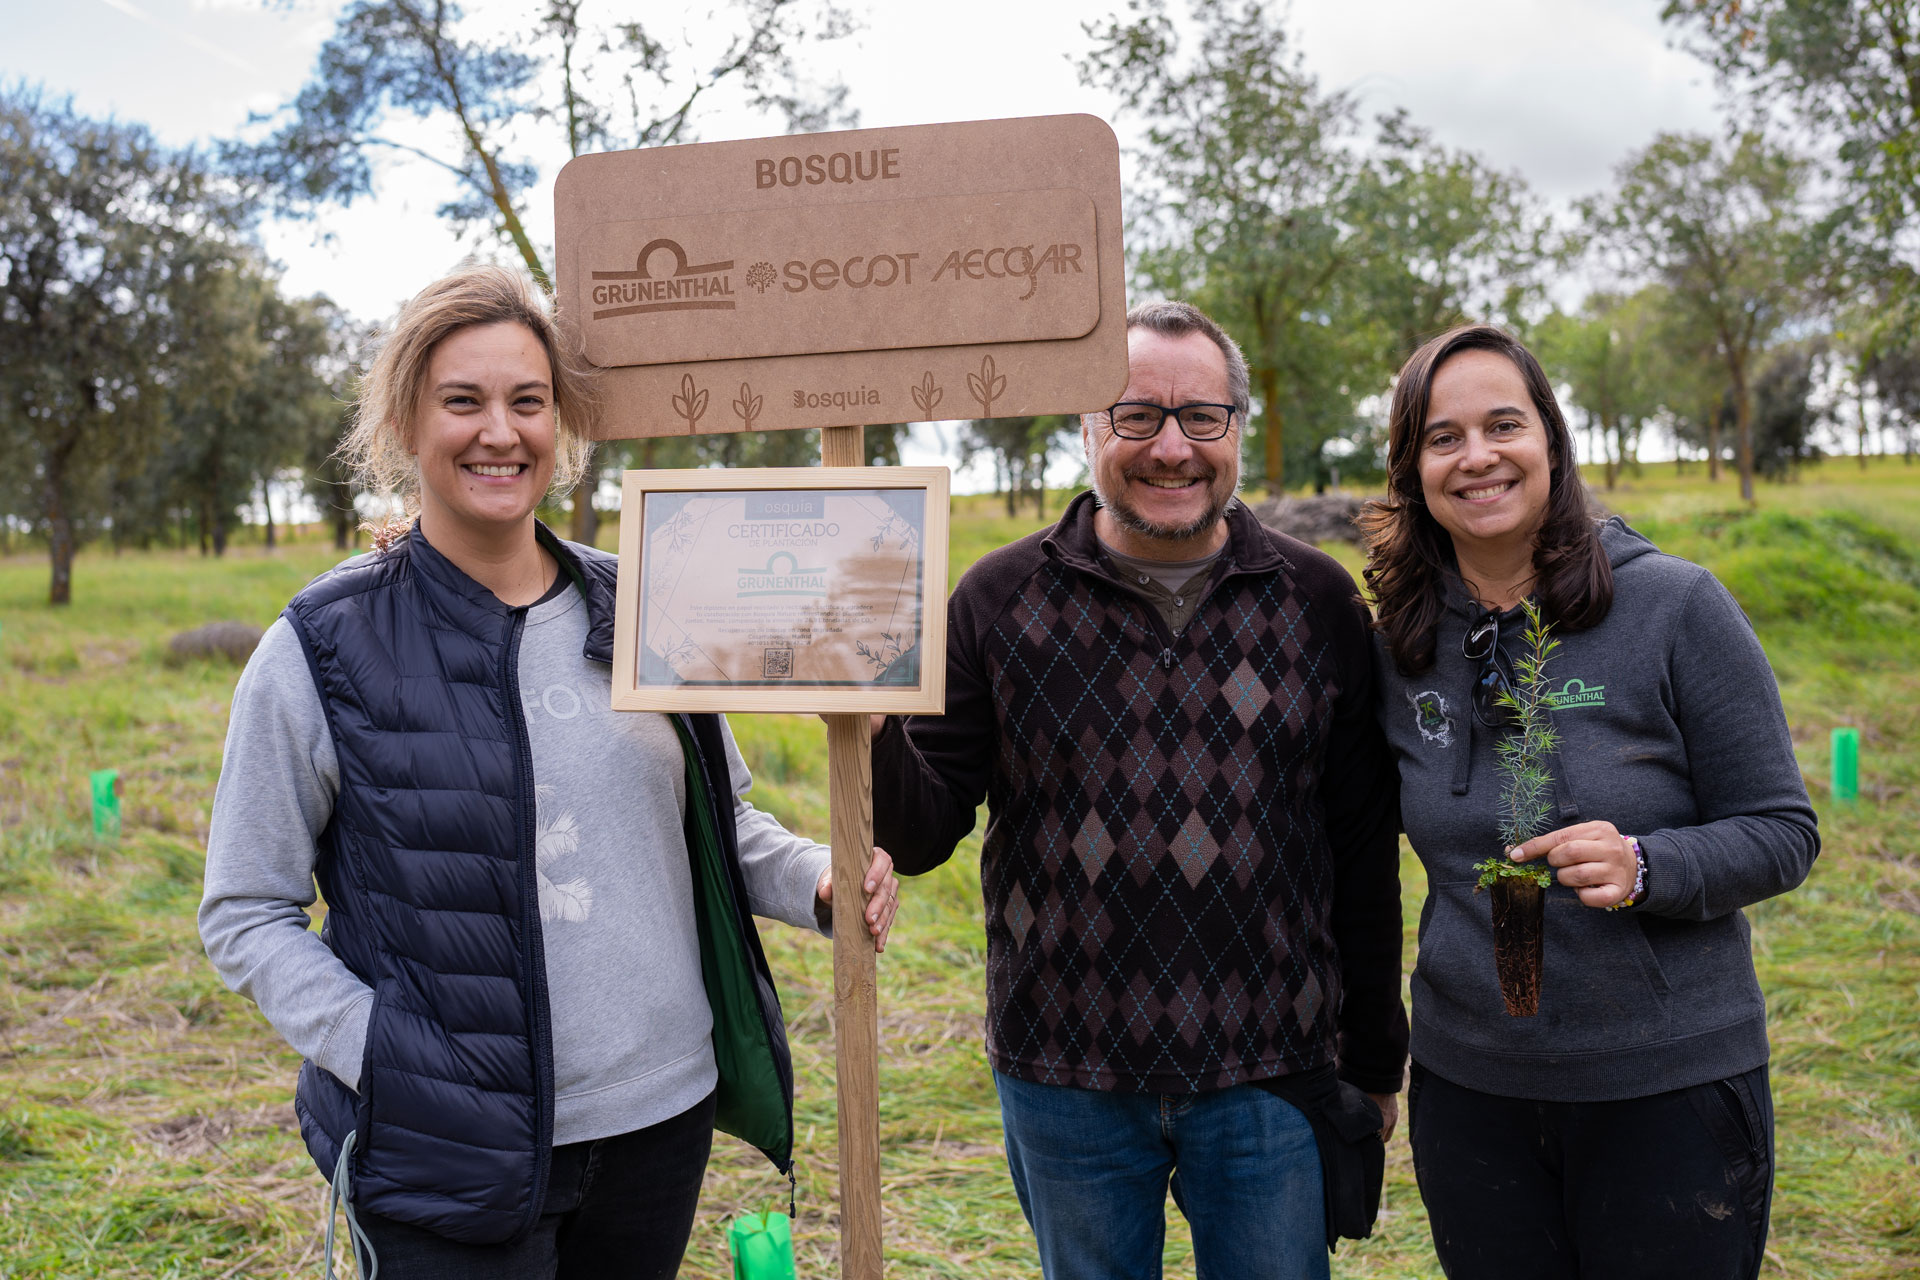 Grünenthal, SECOT, AECOSAR y OAFI se unen para reforestar una zona biodegradada de Madrid